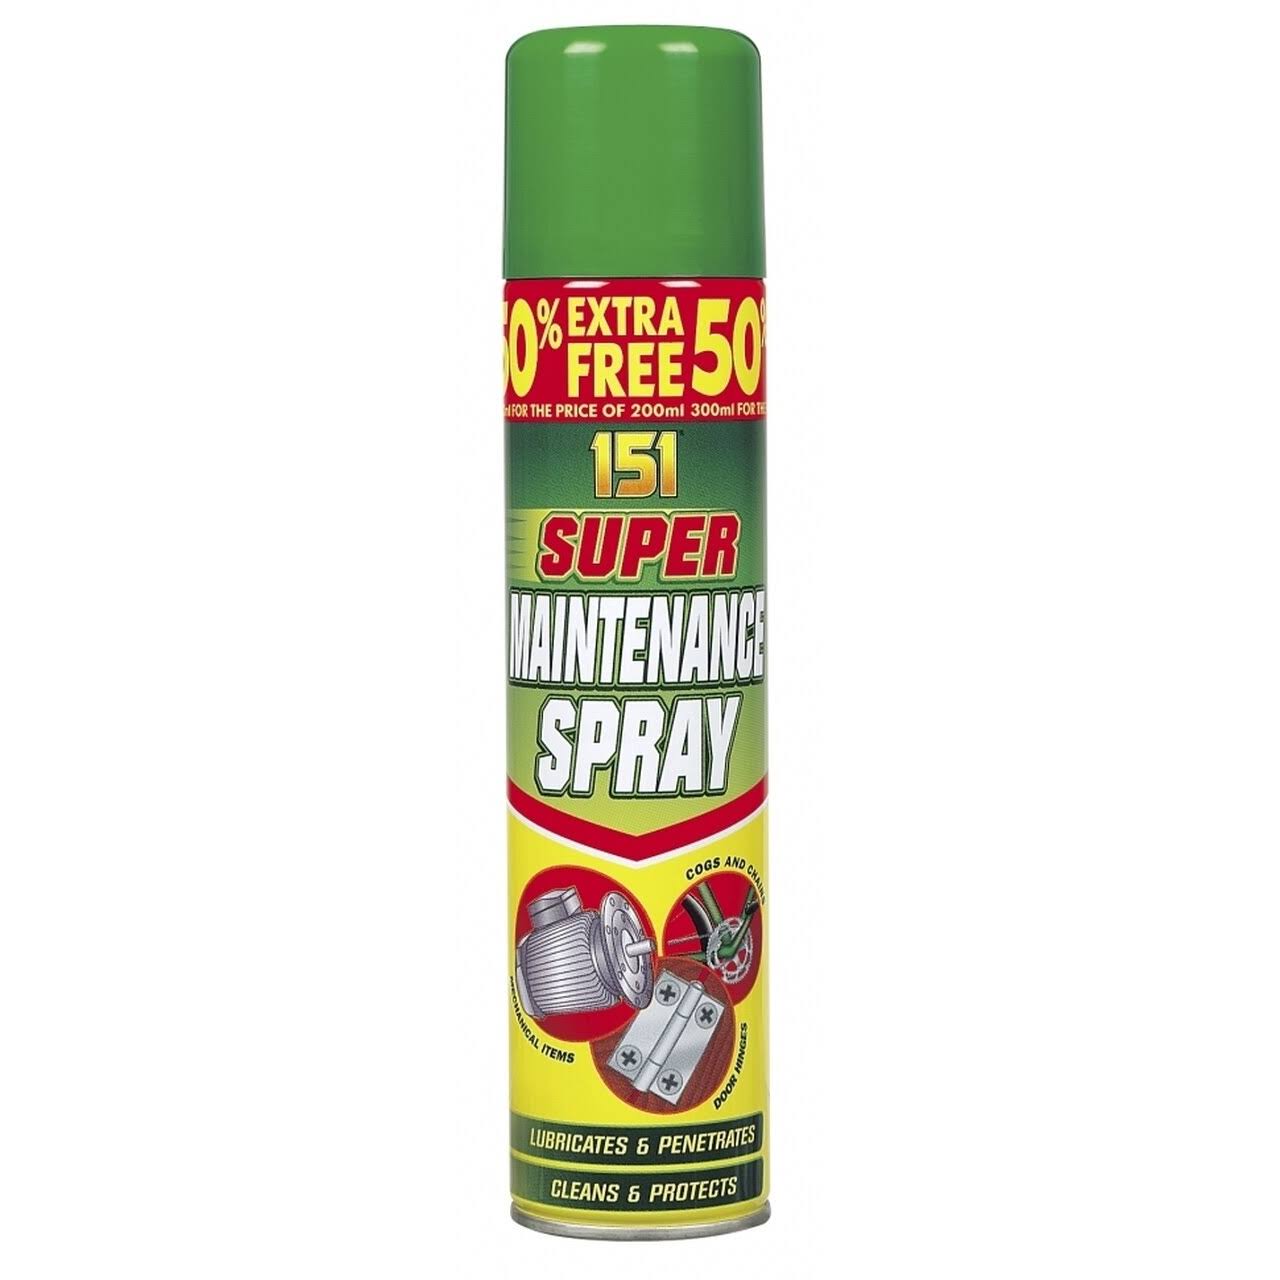 151 Super Maintenance Spray